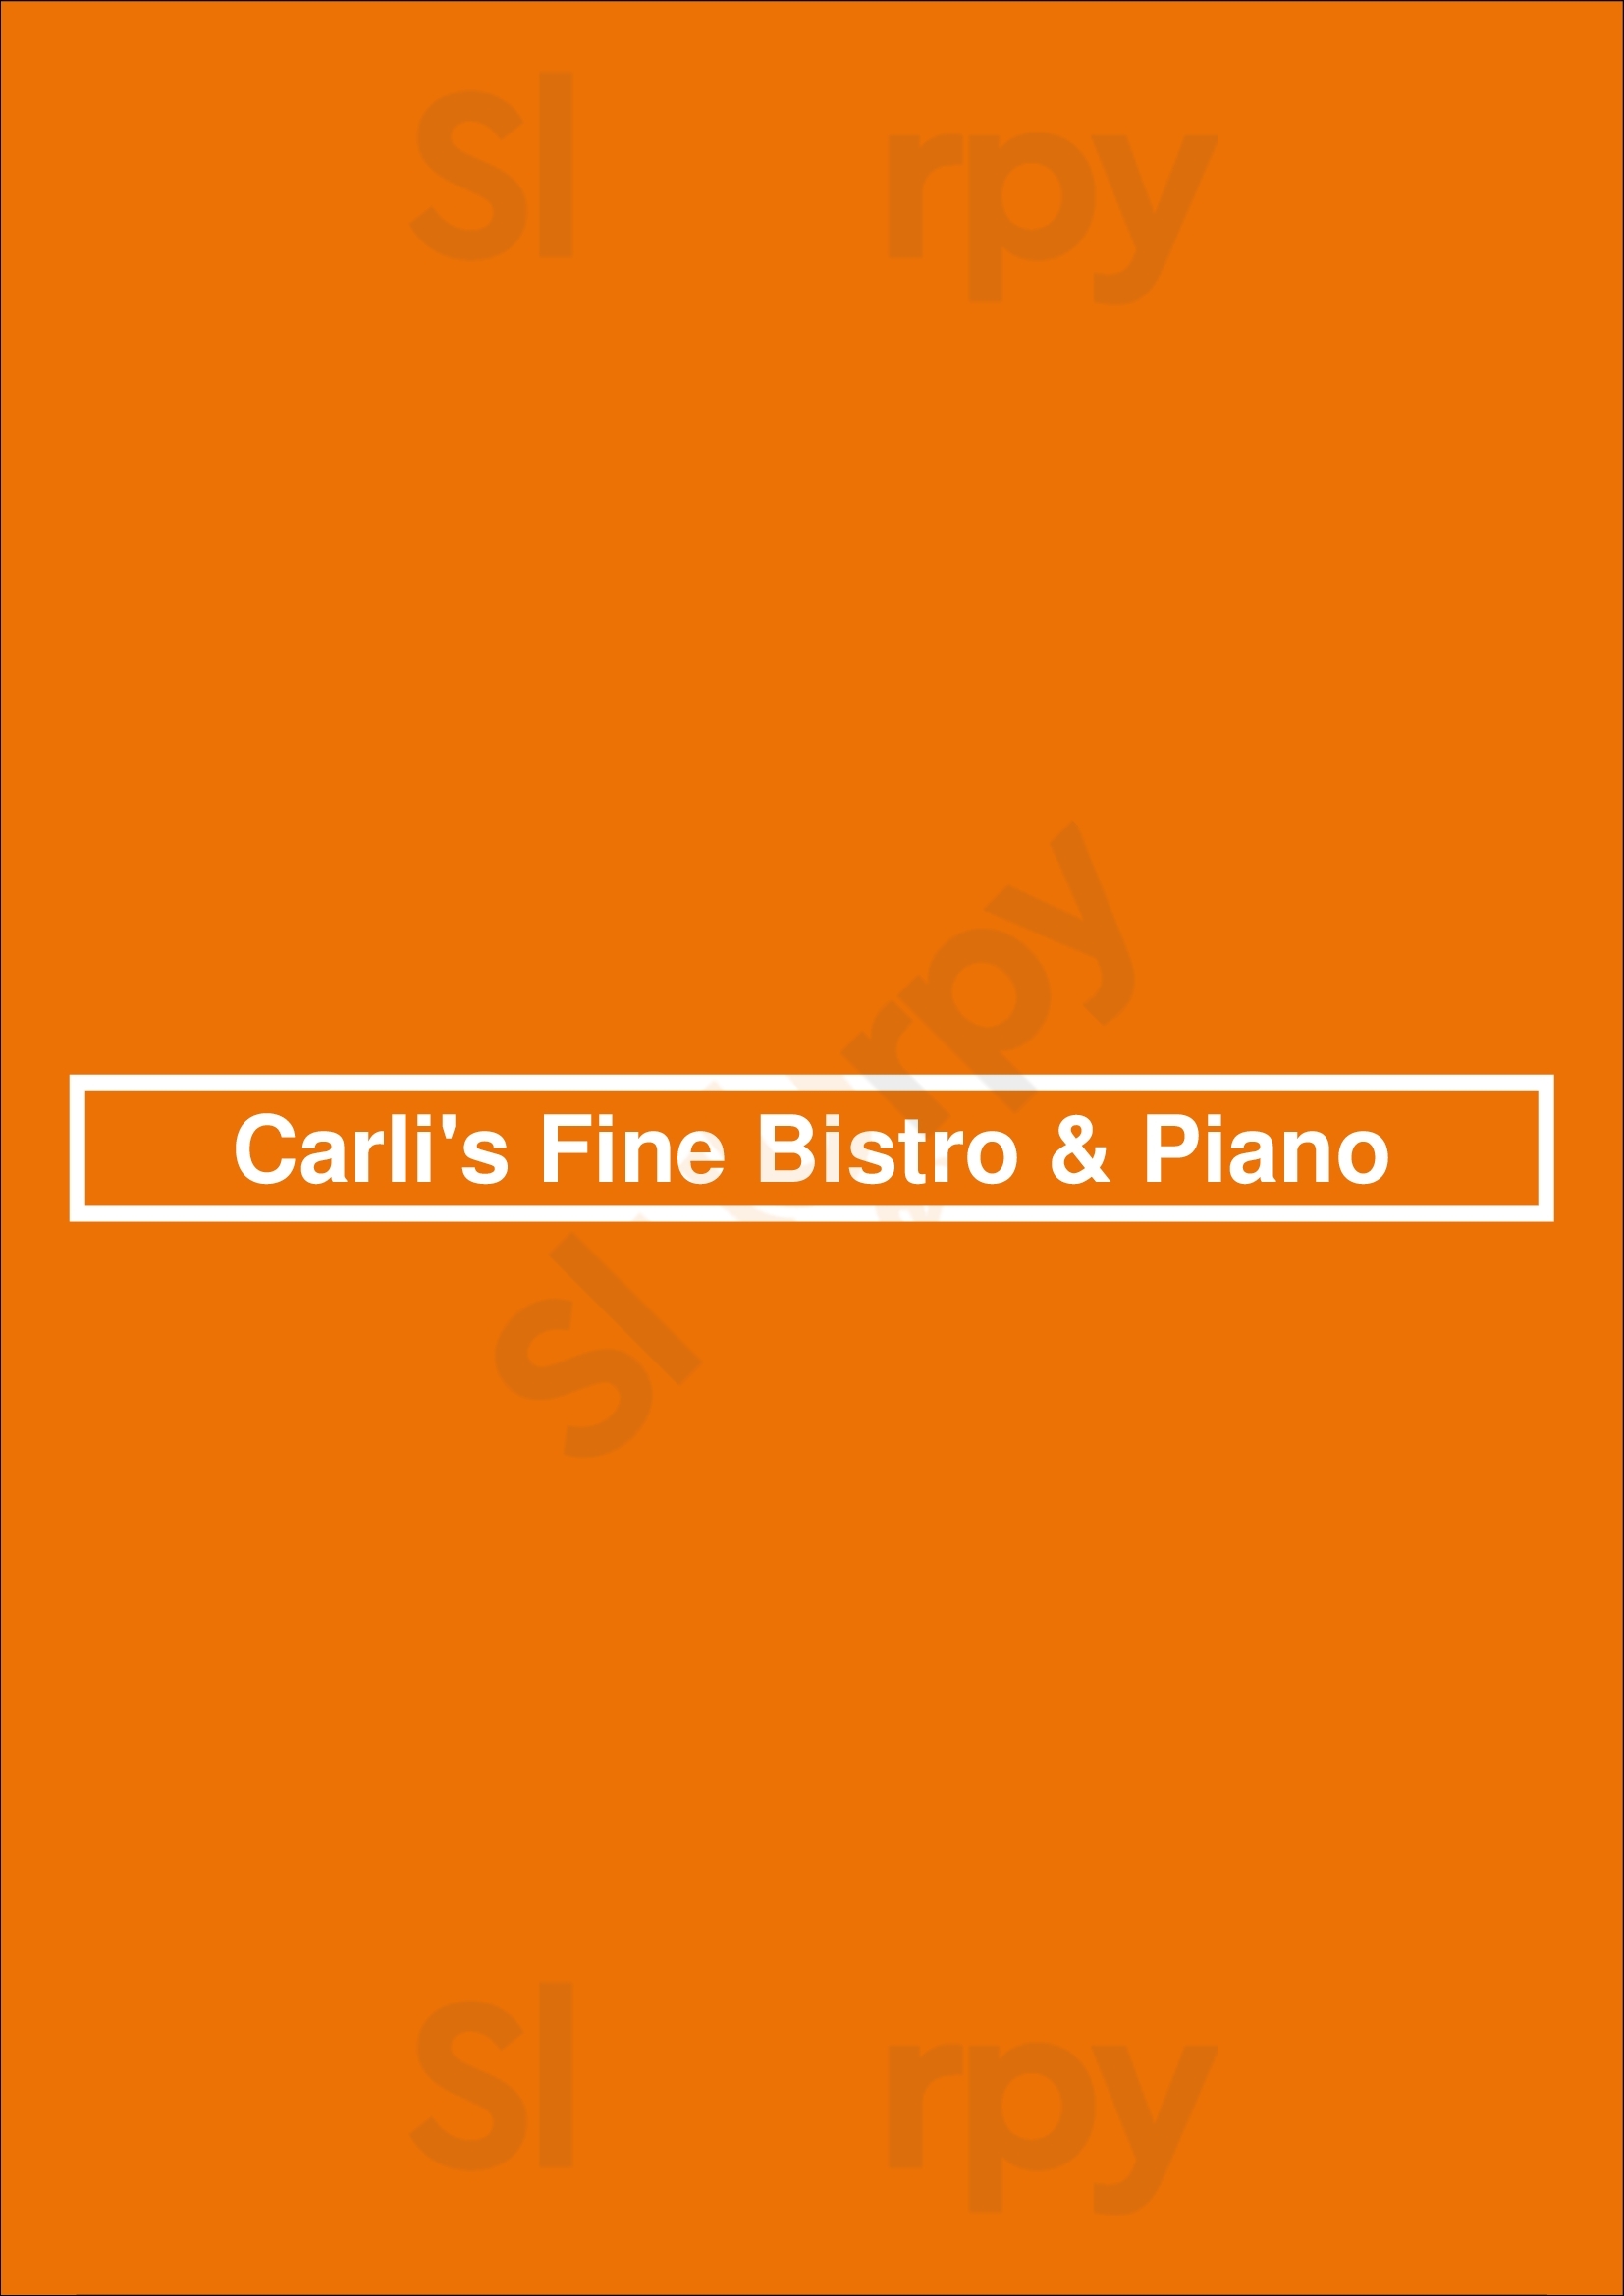 Carli's Fine Bistro & Piano San Juan Menu - 1